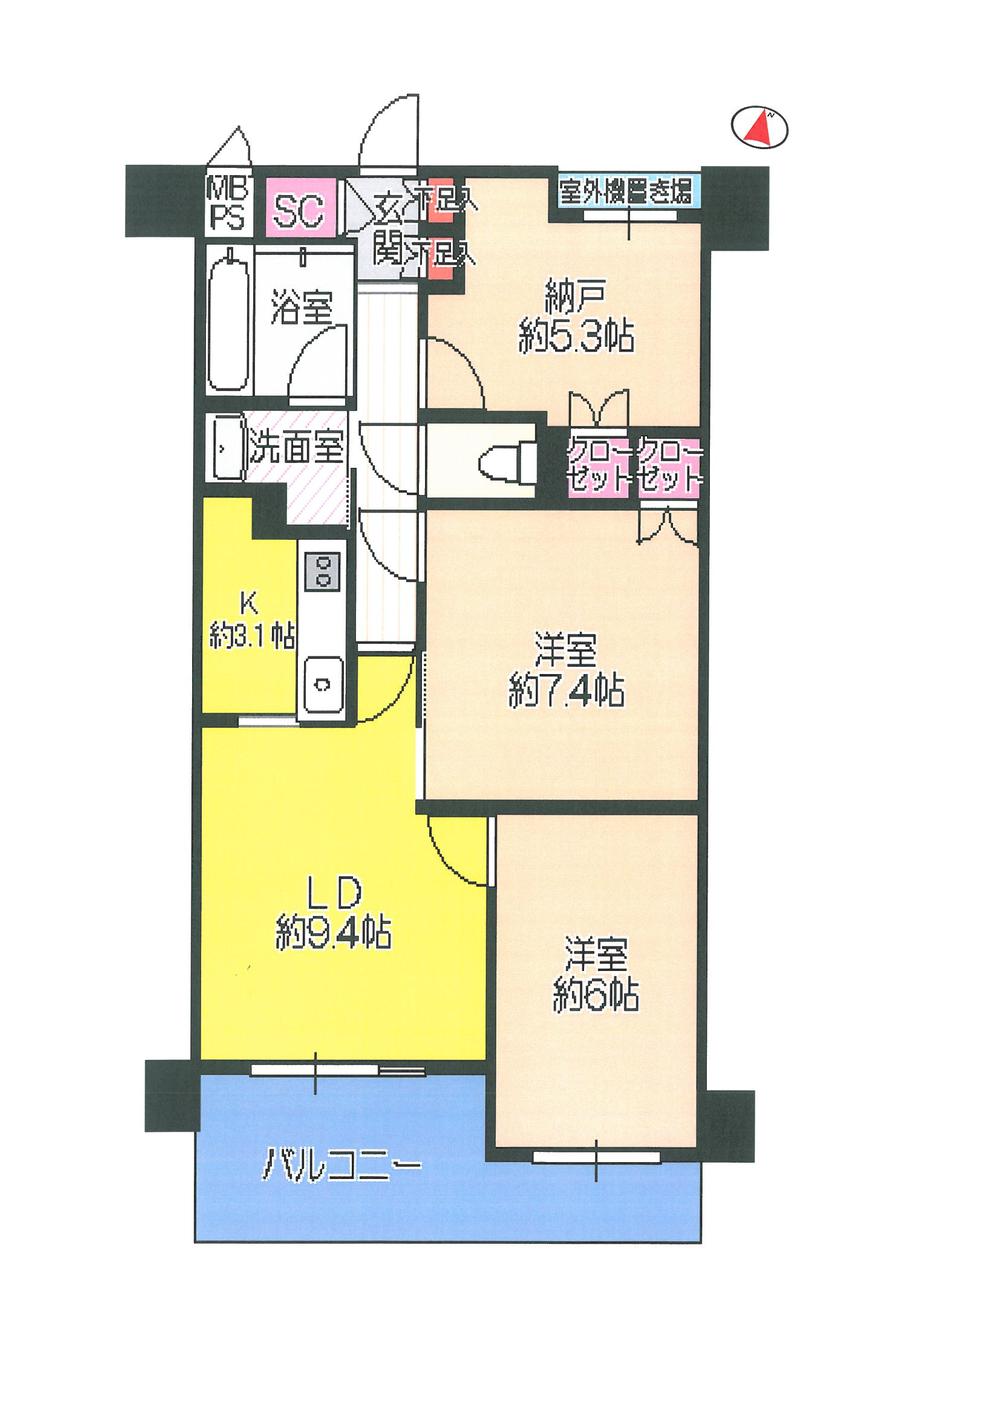 Floor plan. 2LDK + S (storeroom), Price 32,900,000 yen, Occupied area 66.23 sq m , Balcony area 9.36 sq m